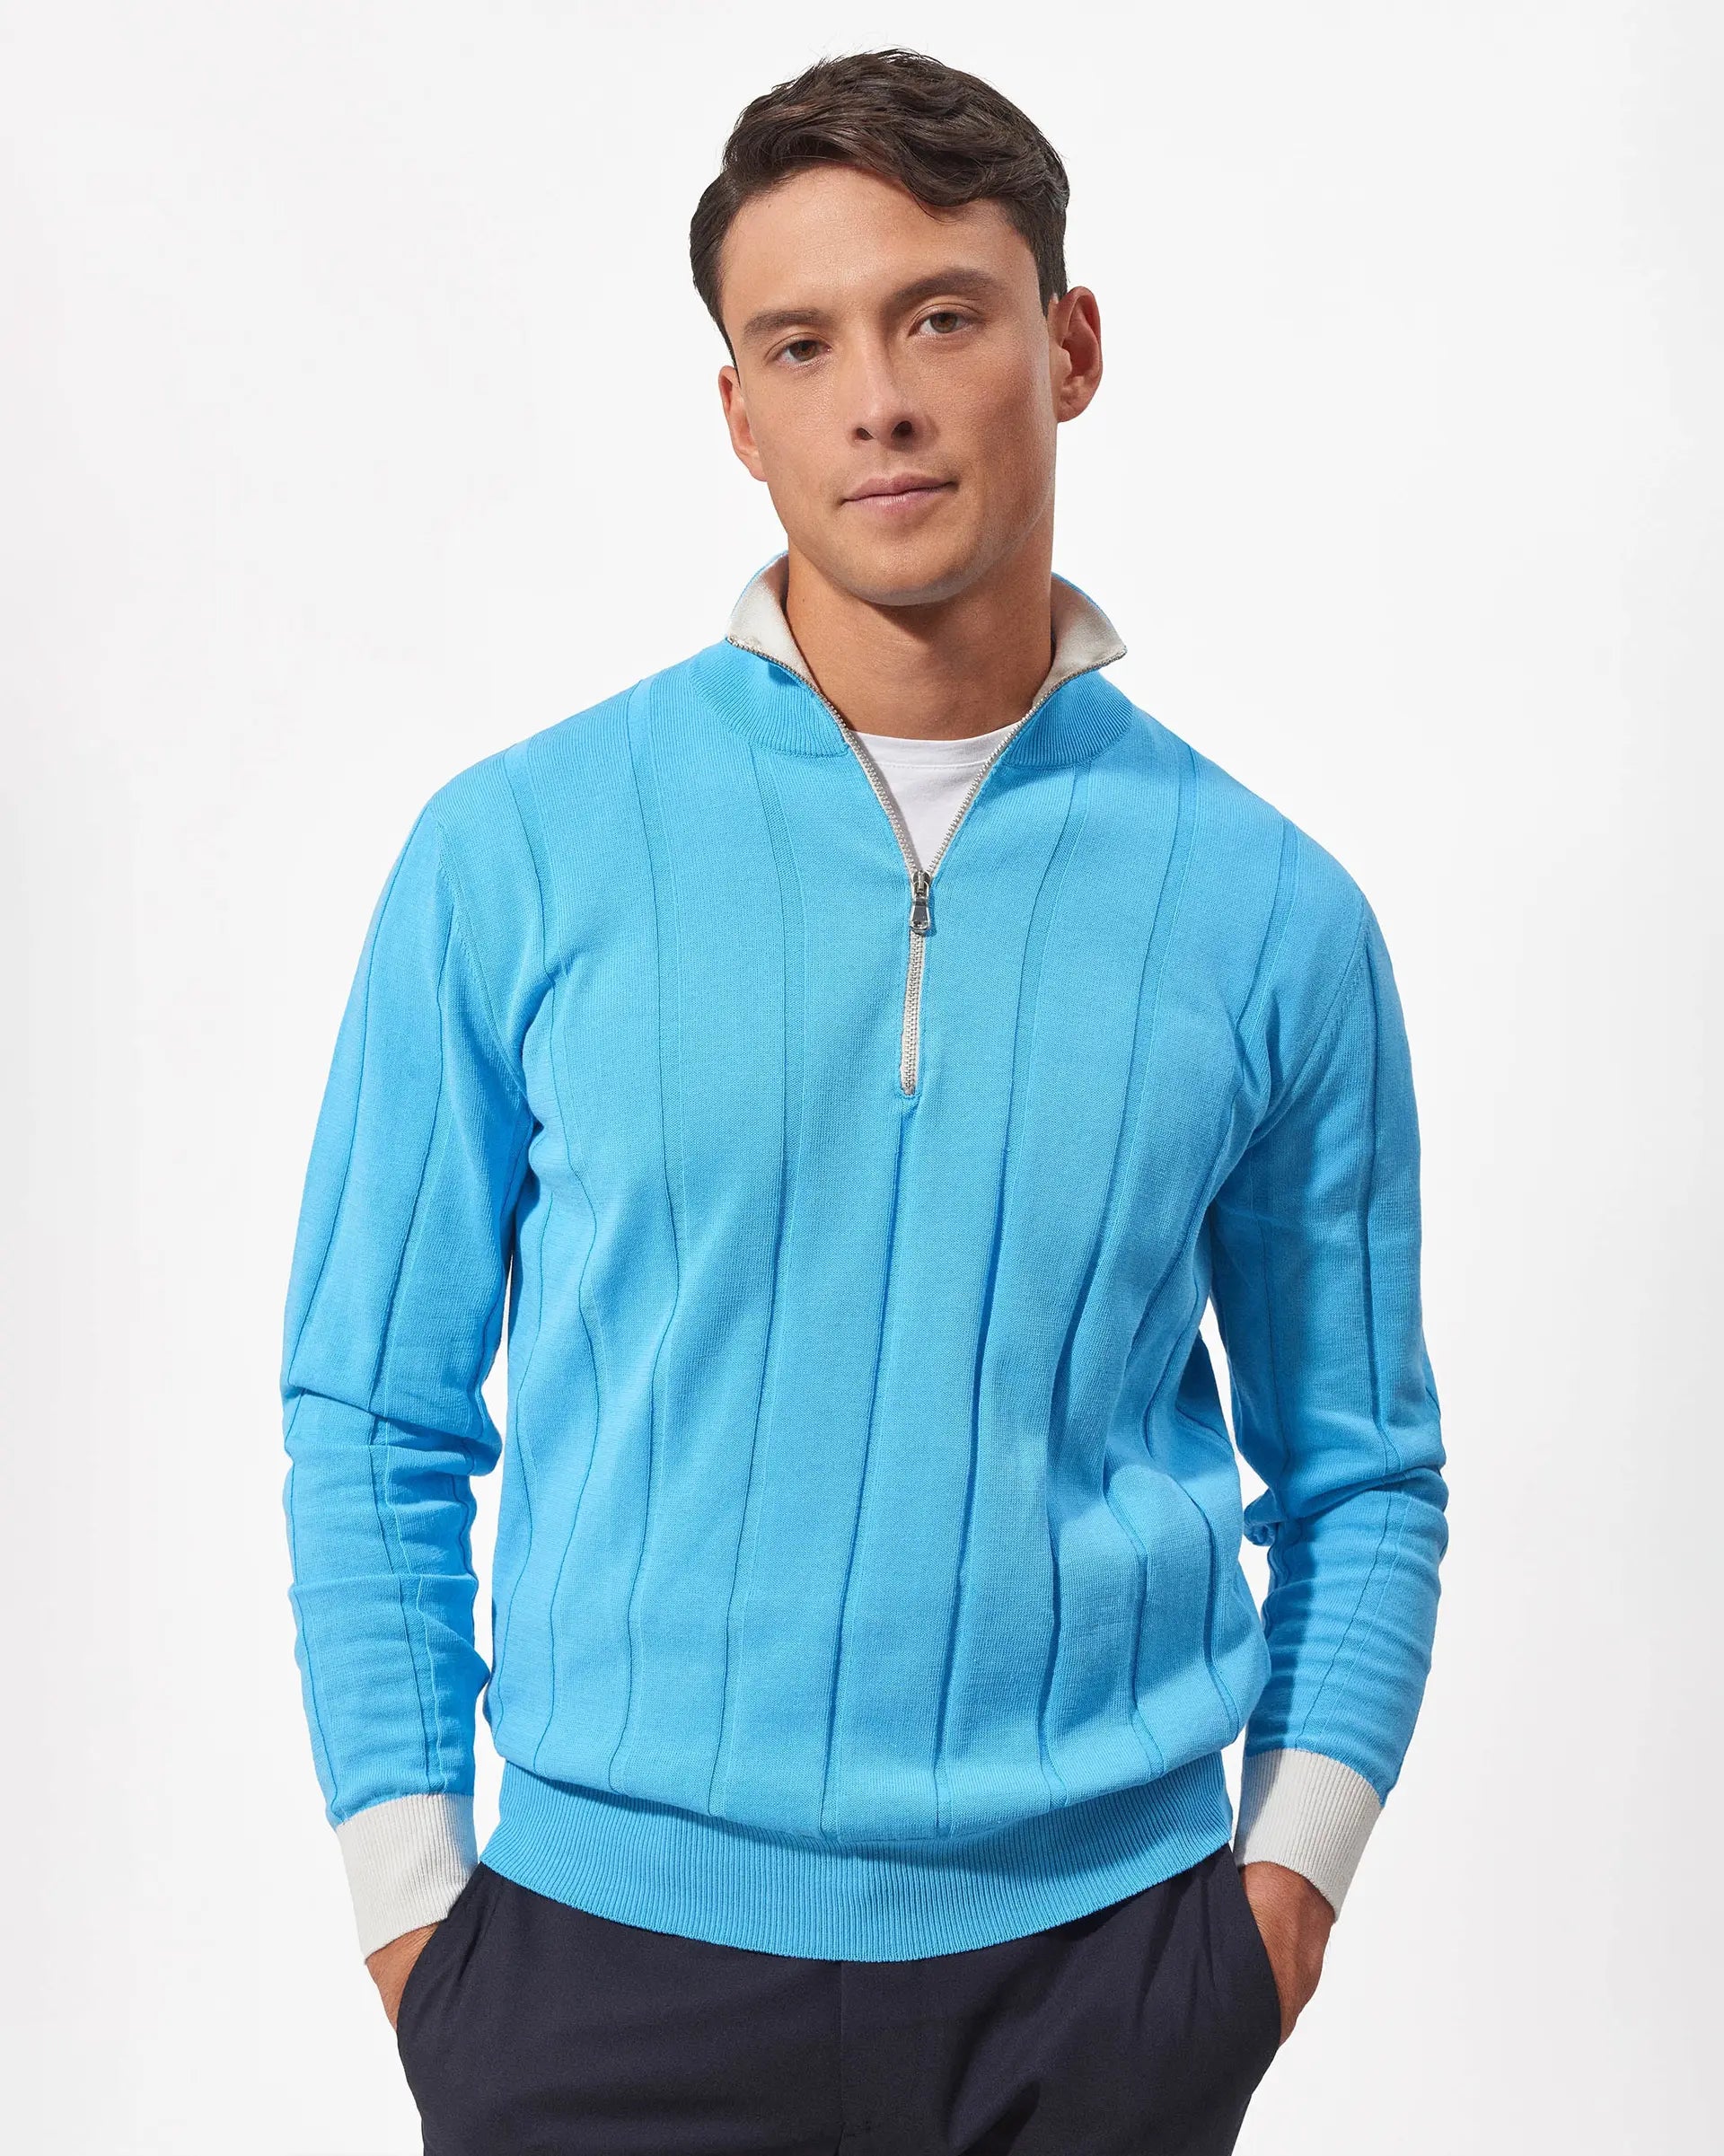 Light blue cotton half zip sweater 12 gauge